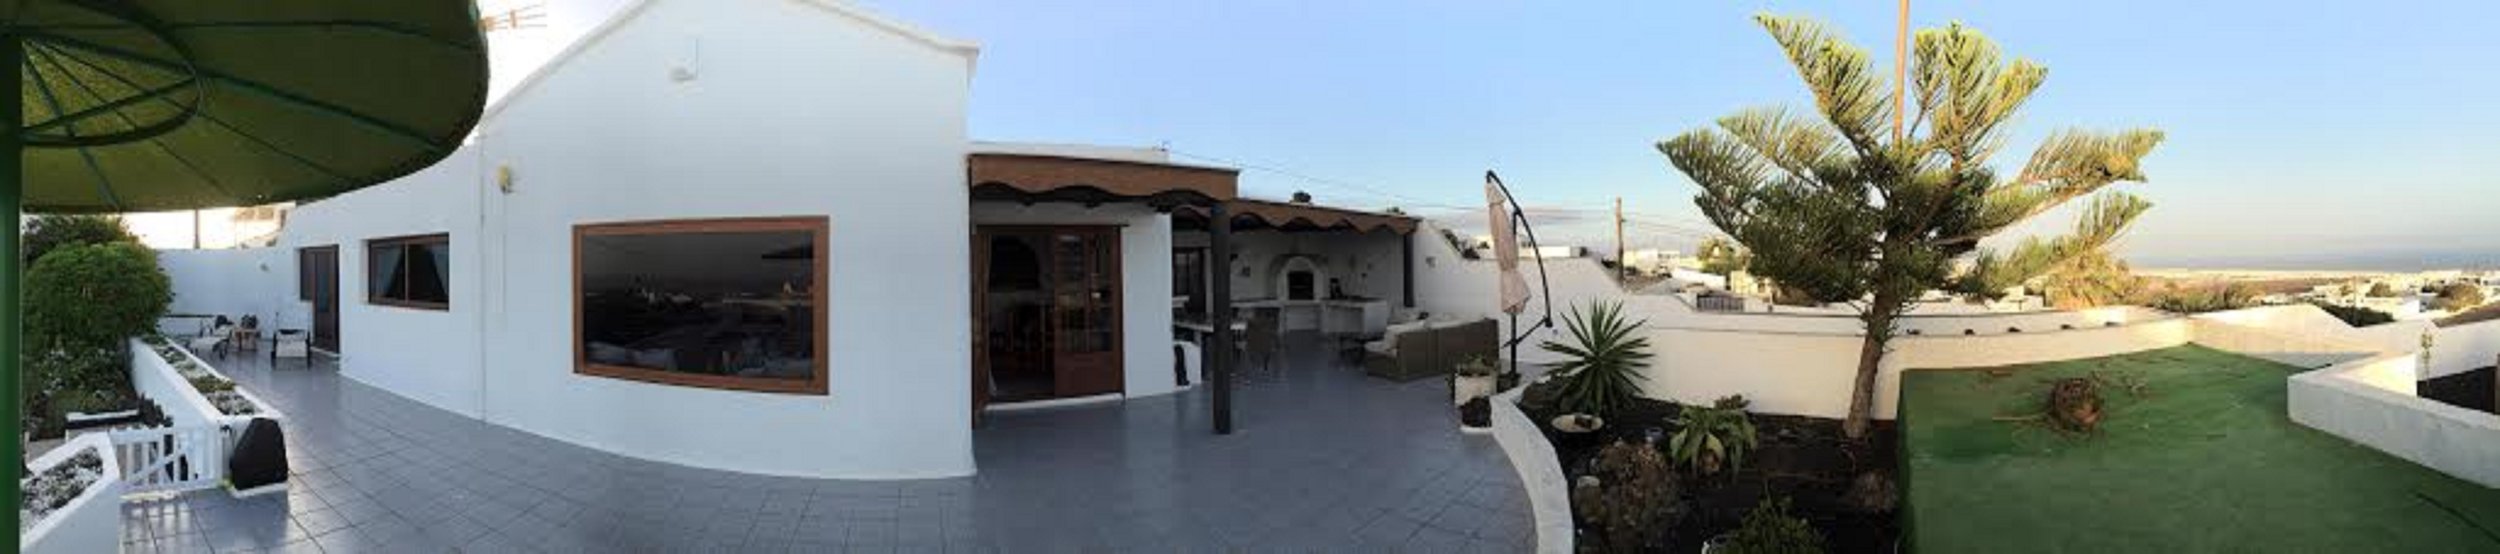 Villa panorama 1.jpg